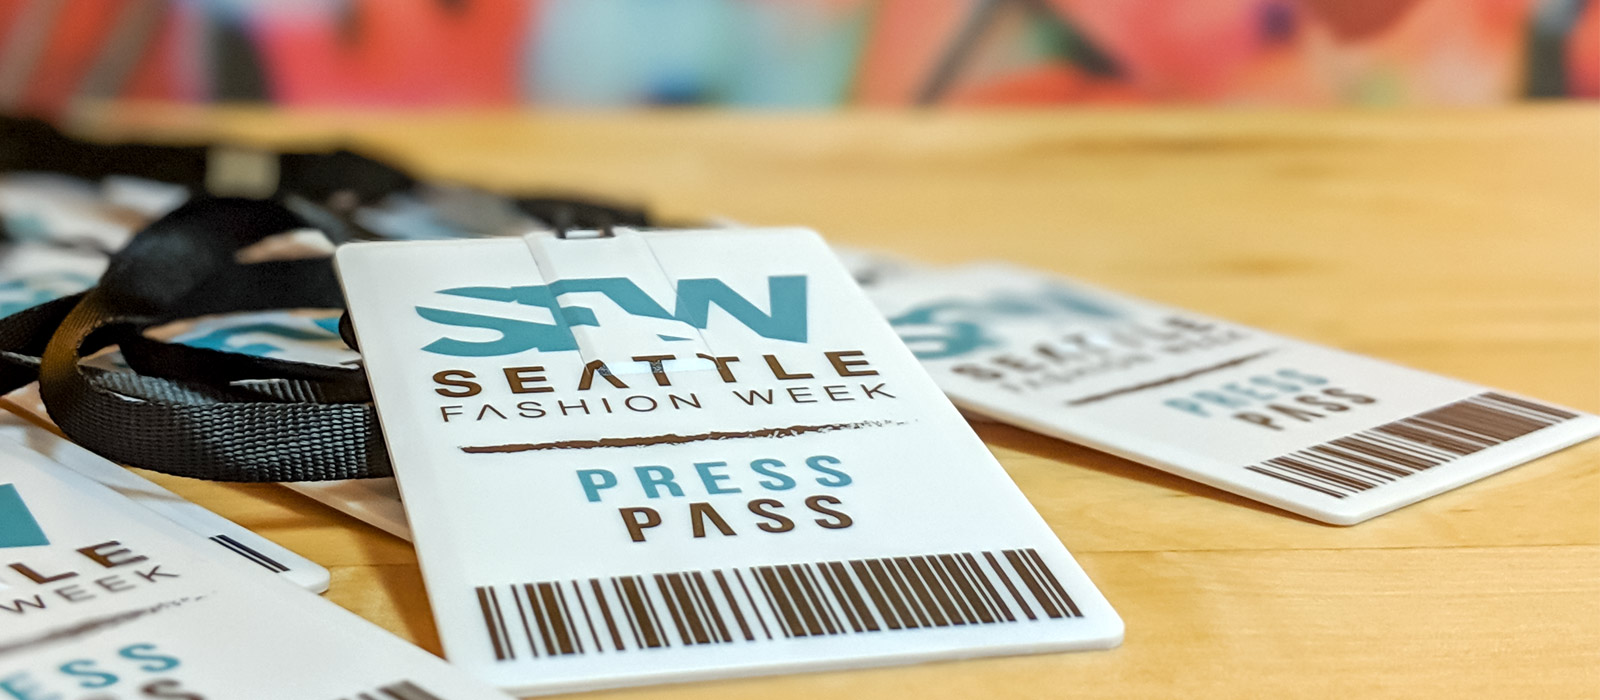 Seattle Fashion Week Press Pass Flash Drives